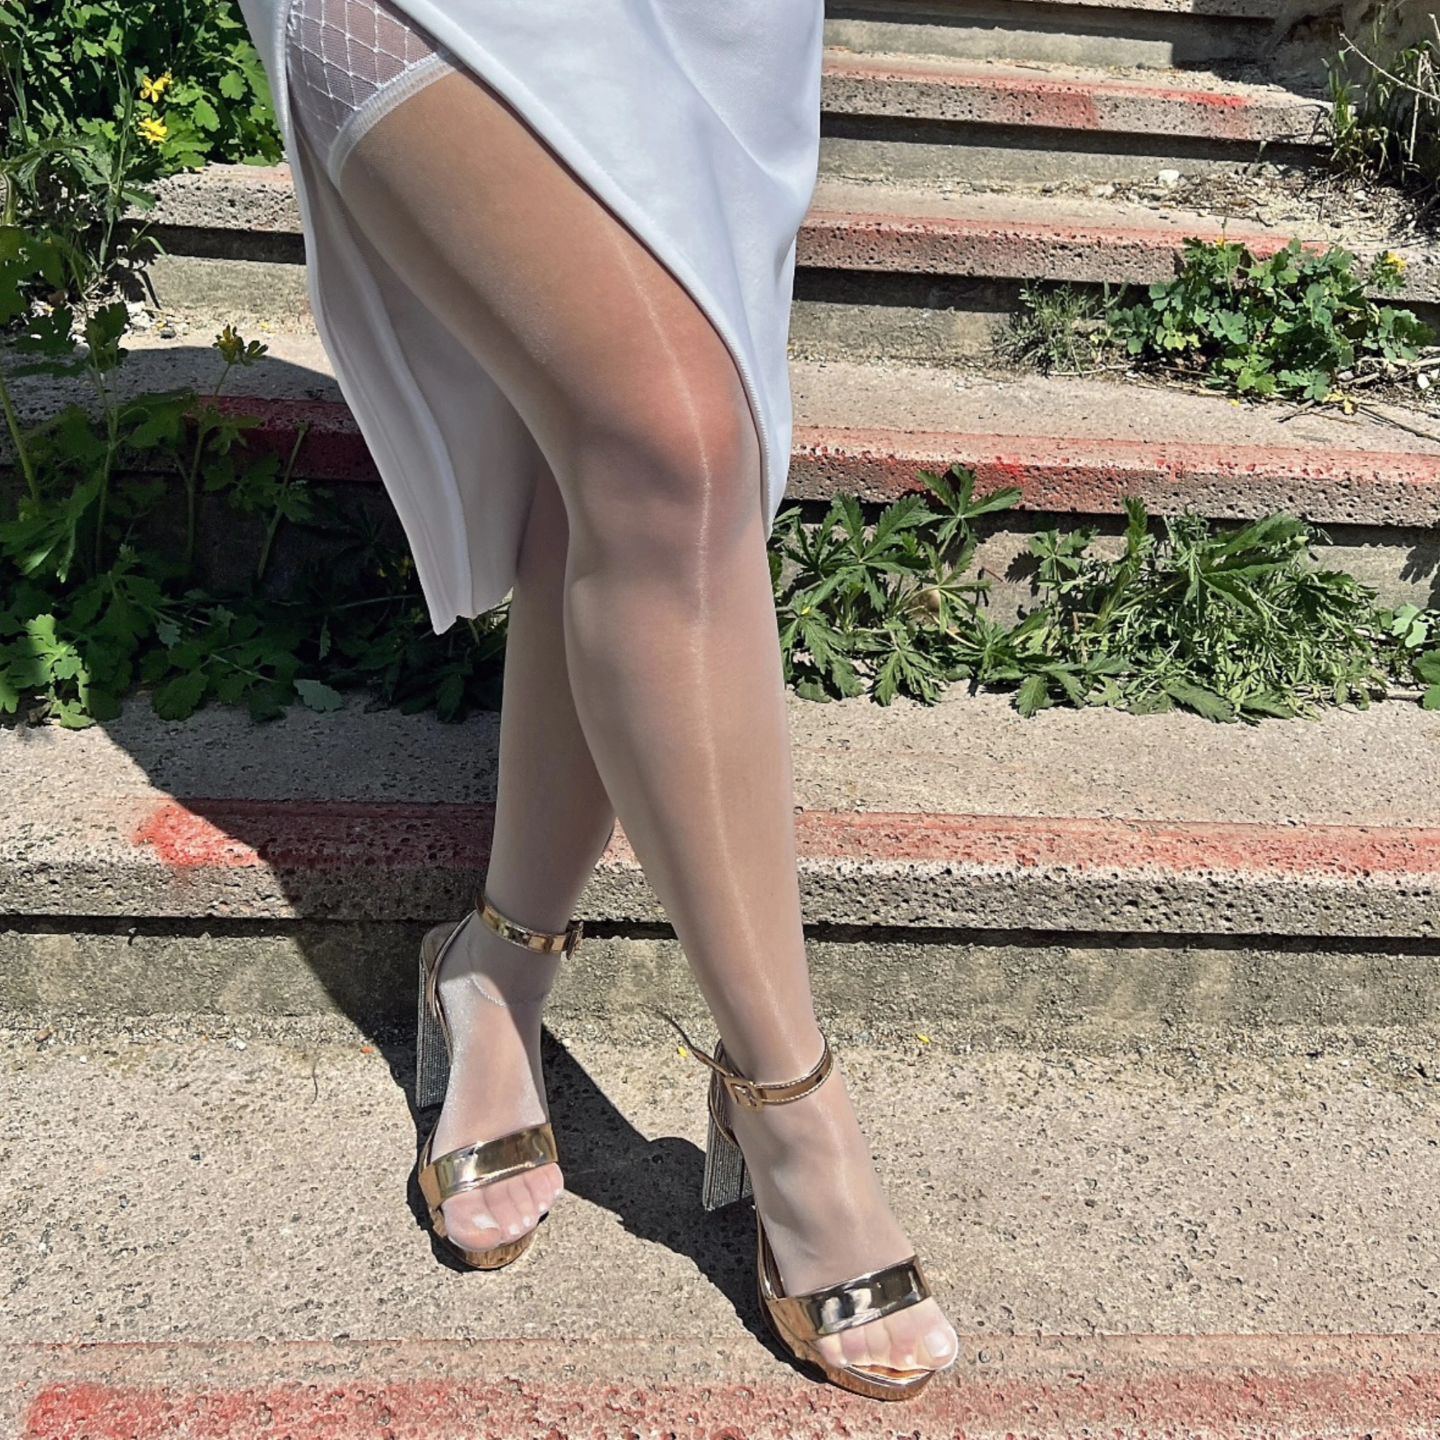 White outfit - white mini dress + white stockings + golden high heels sandals 🤍🤍🤍
City trip, park walk, car selfies. 

#autoreggenti #calzedonia #calzeautoreggenti #stupenda #intimissimi #collantblanc #collant #romantic #roma